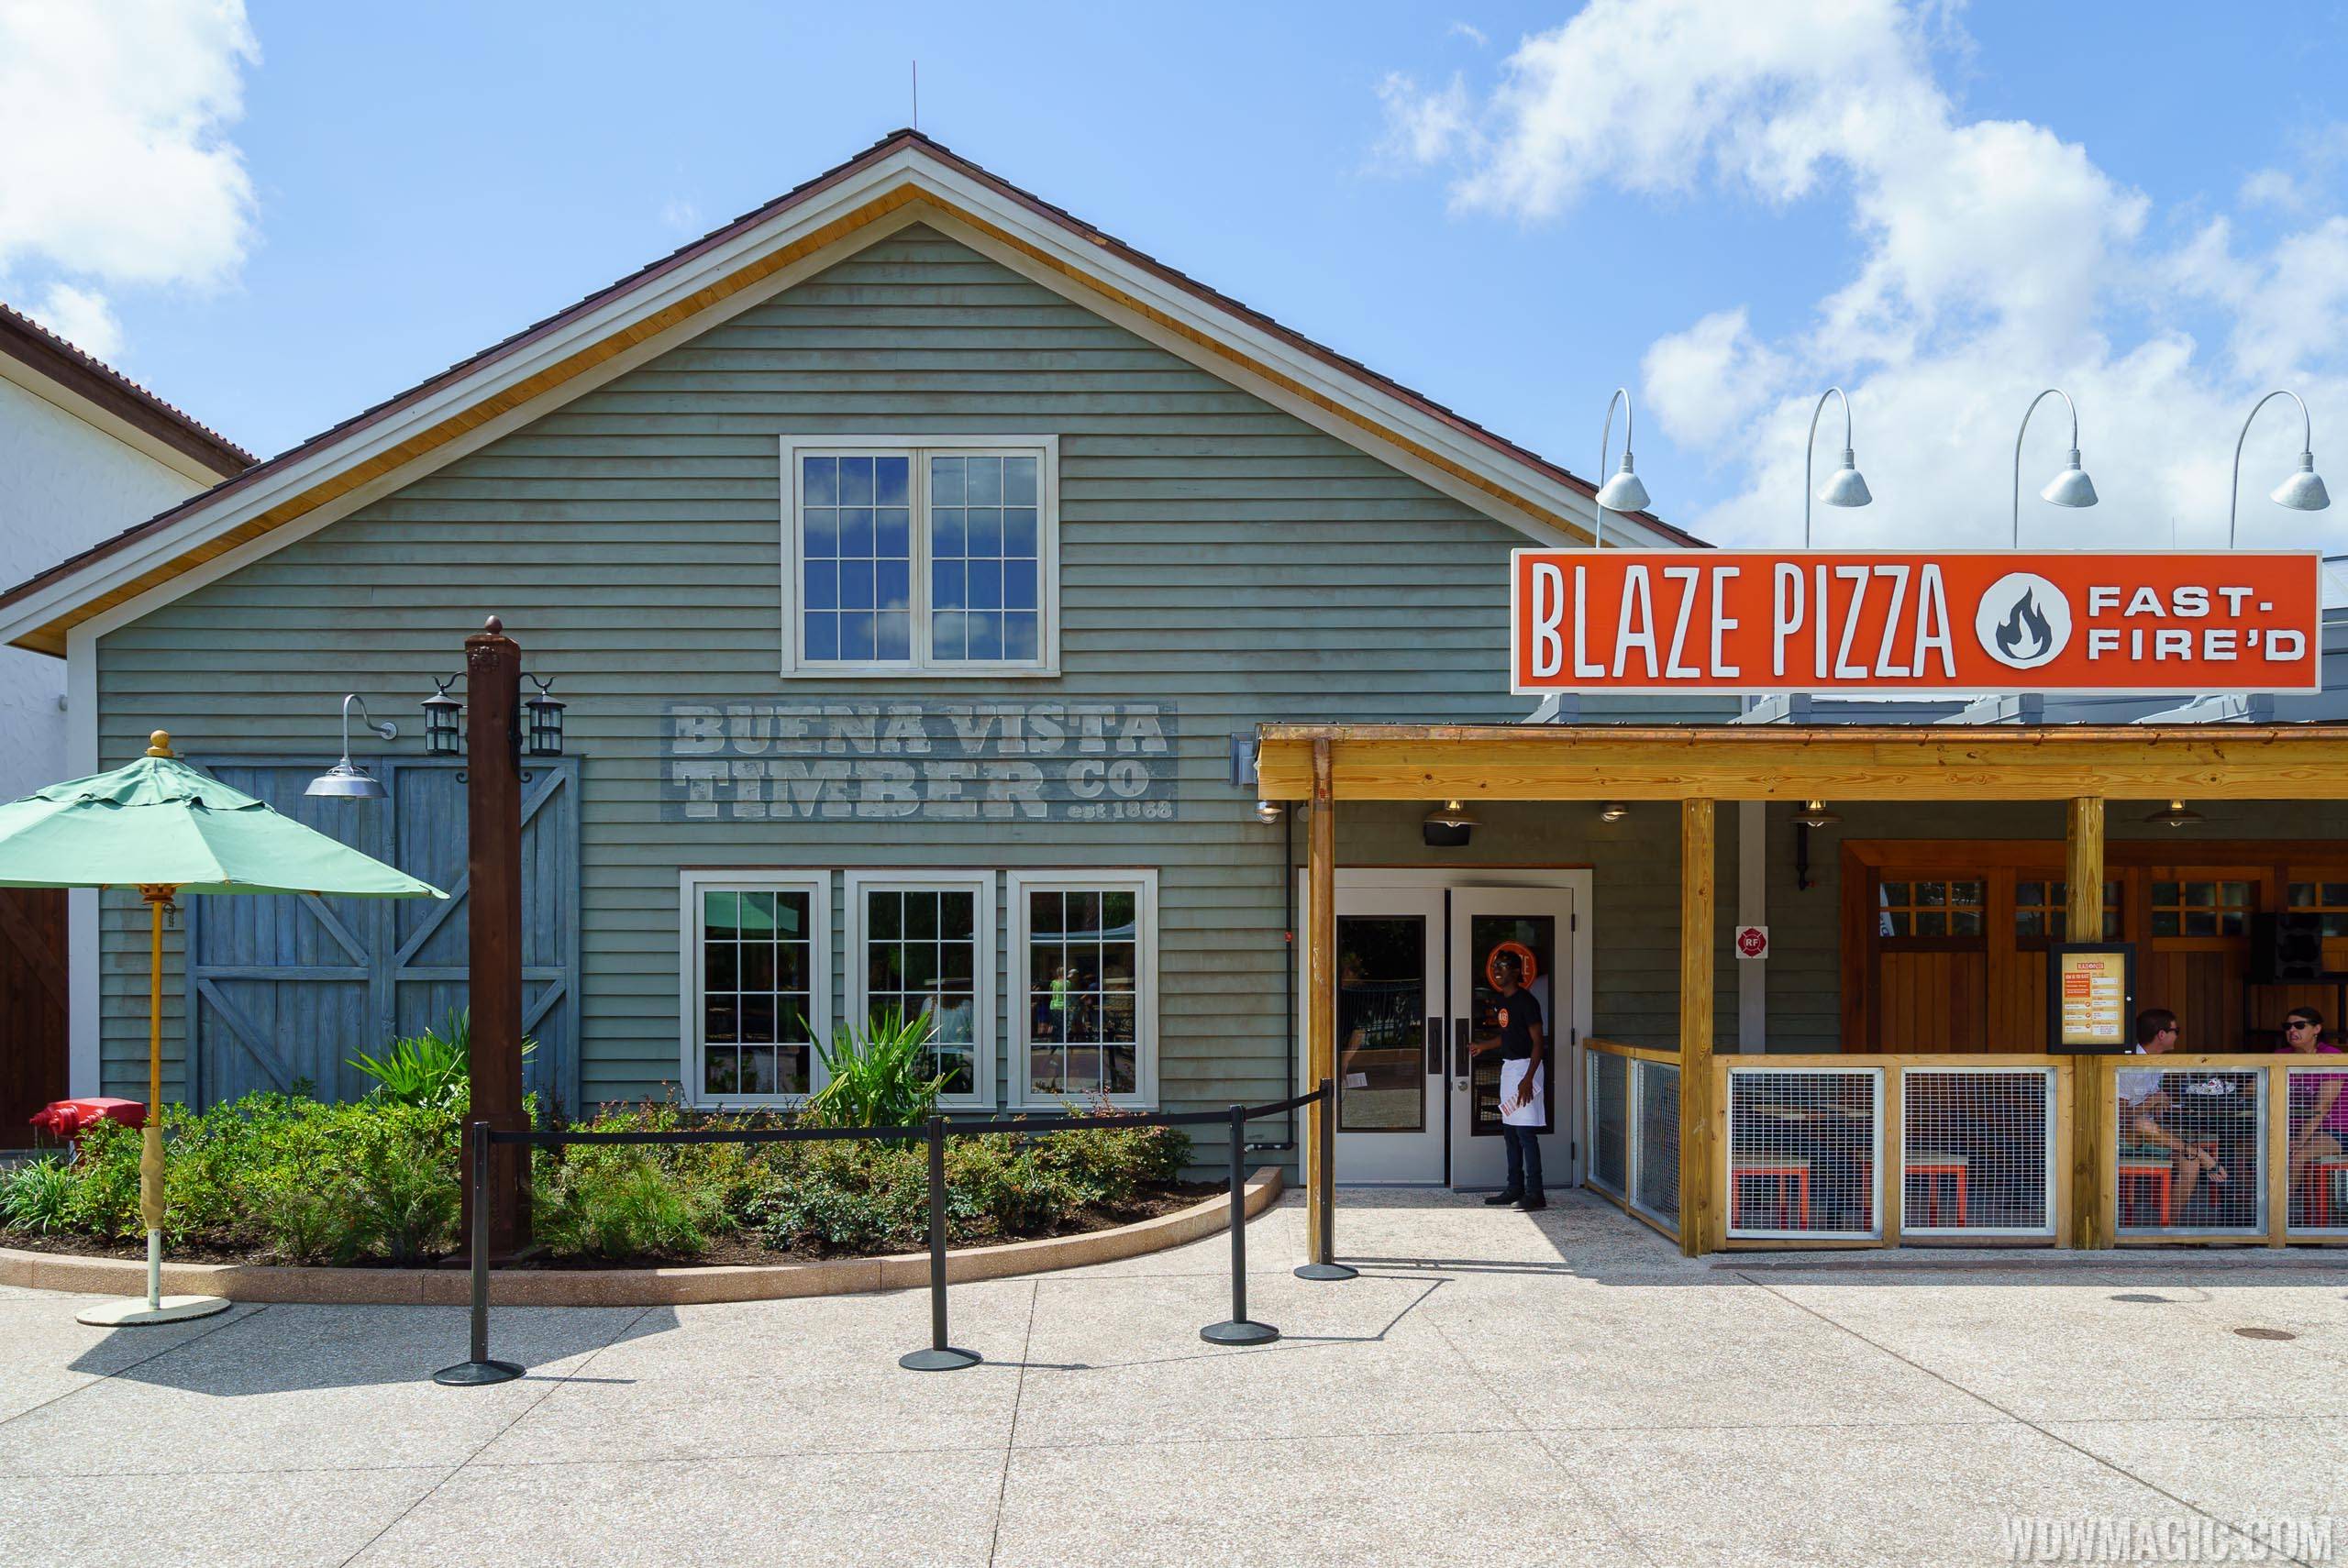 Blaze Pizza overview